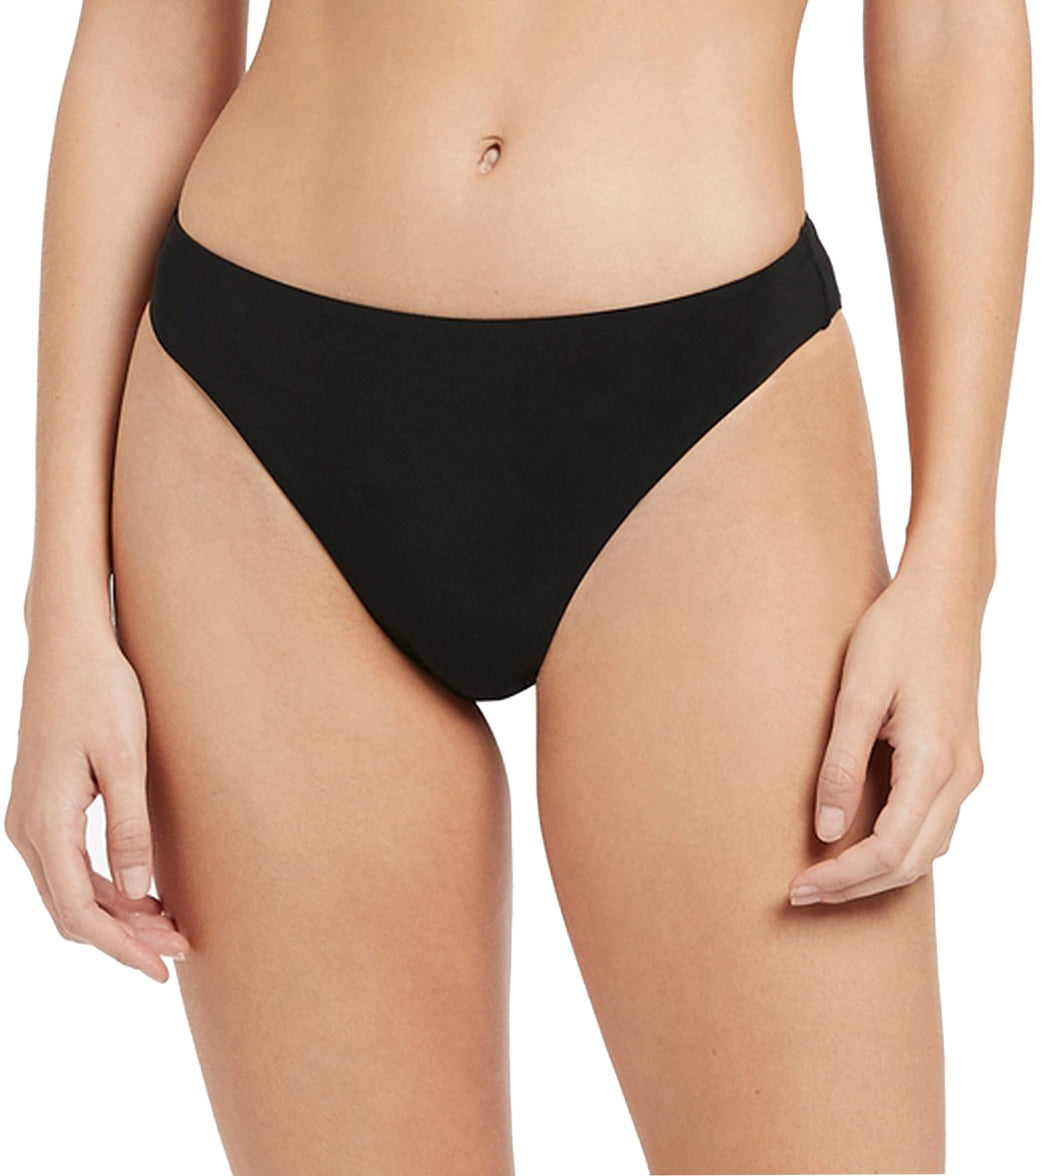 Jets Swimwear Australia Womens Jetset High Legline Bikini Bottom